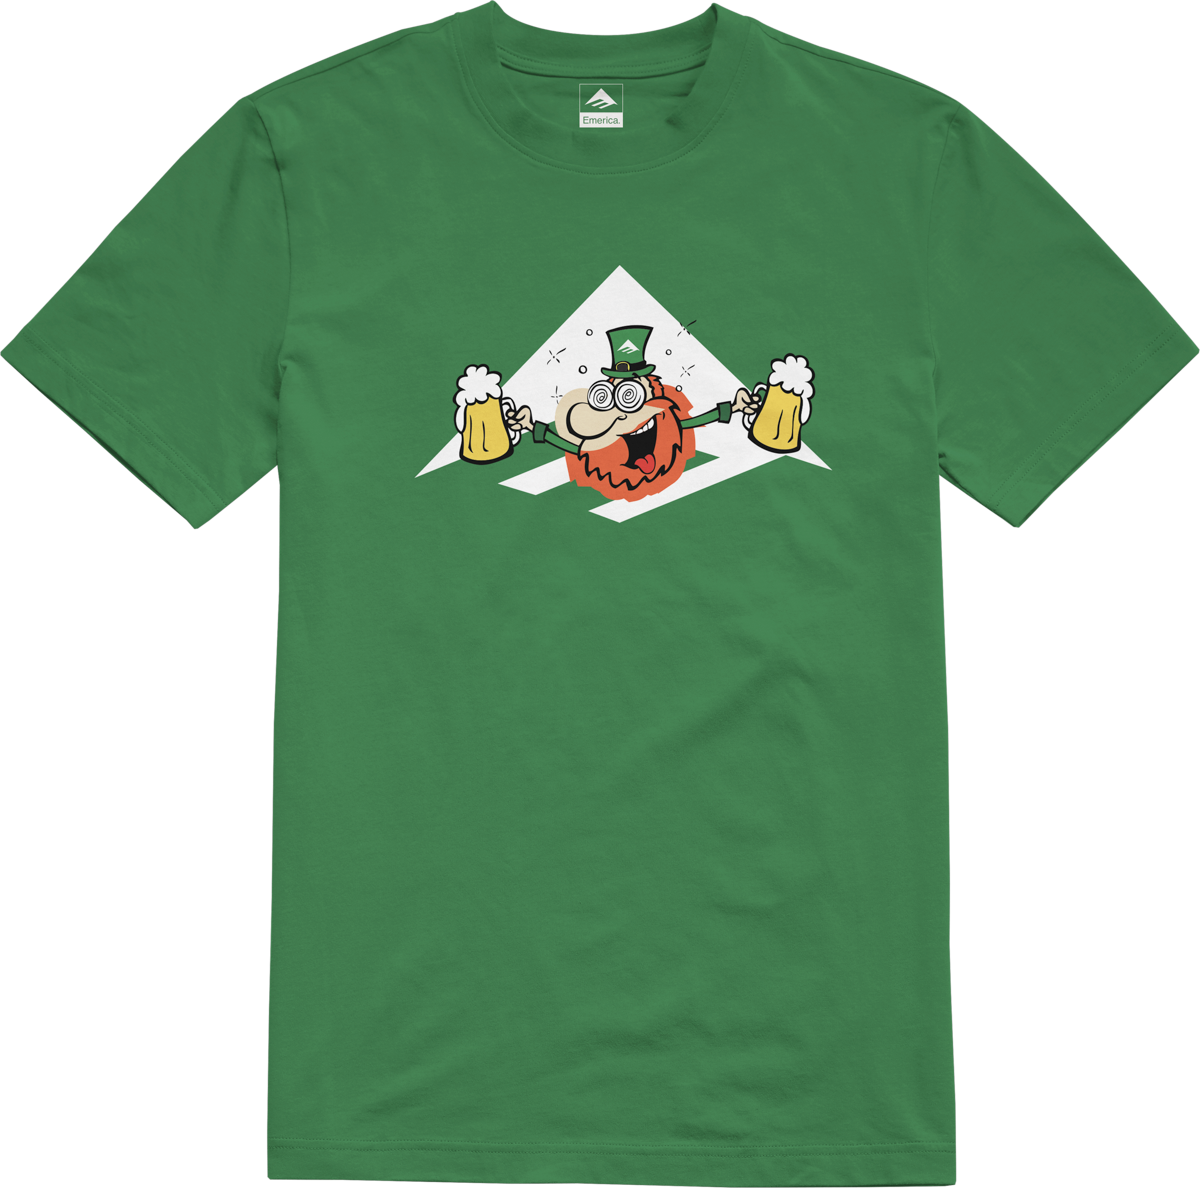 Emerica Mens Leprechaun Triangle Tee Kelly Green T-Shirt